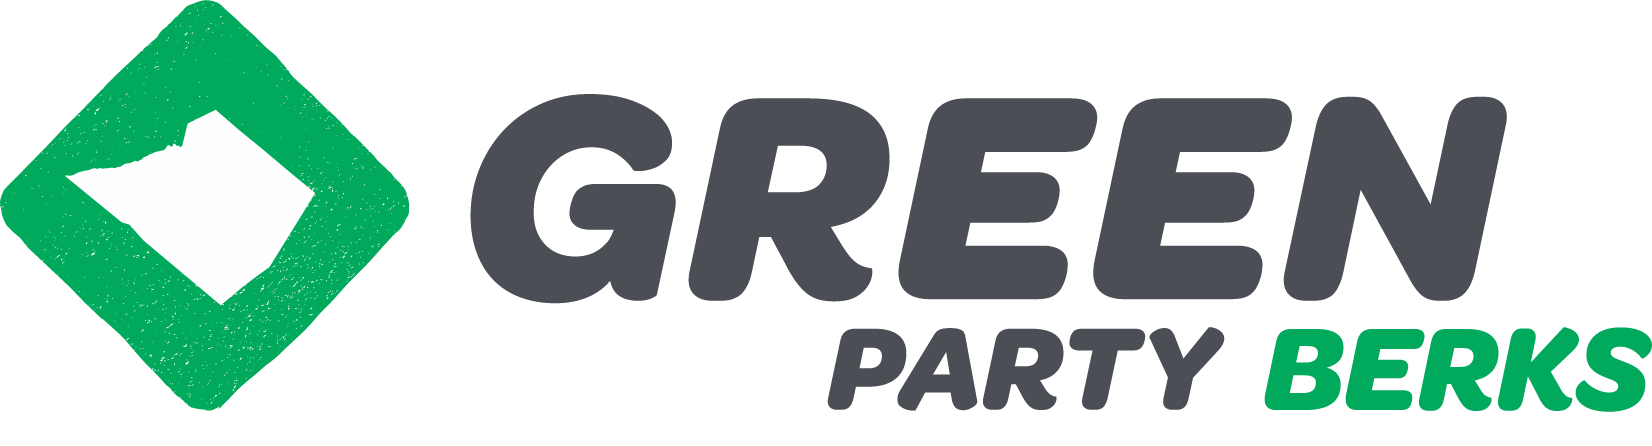 green party platform